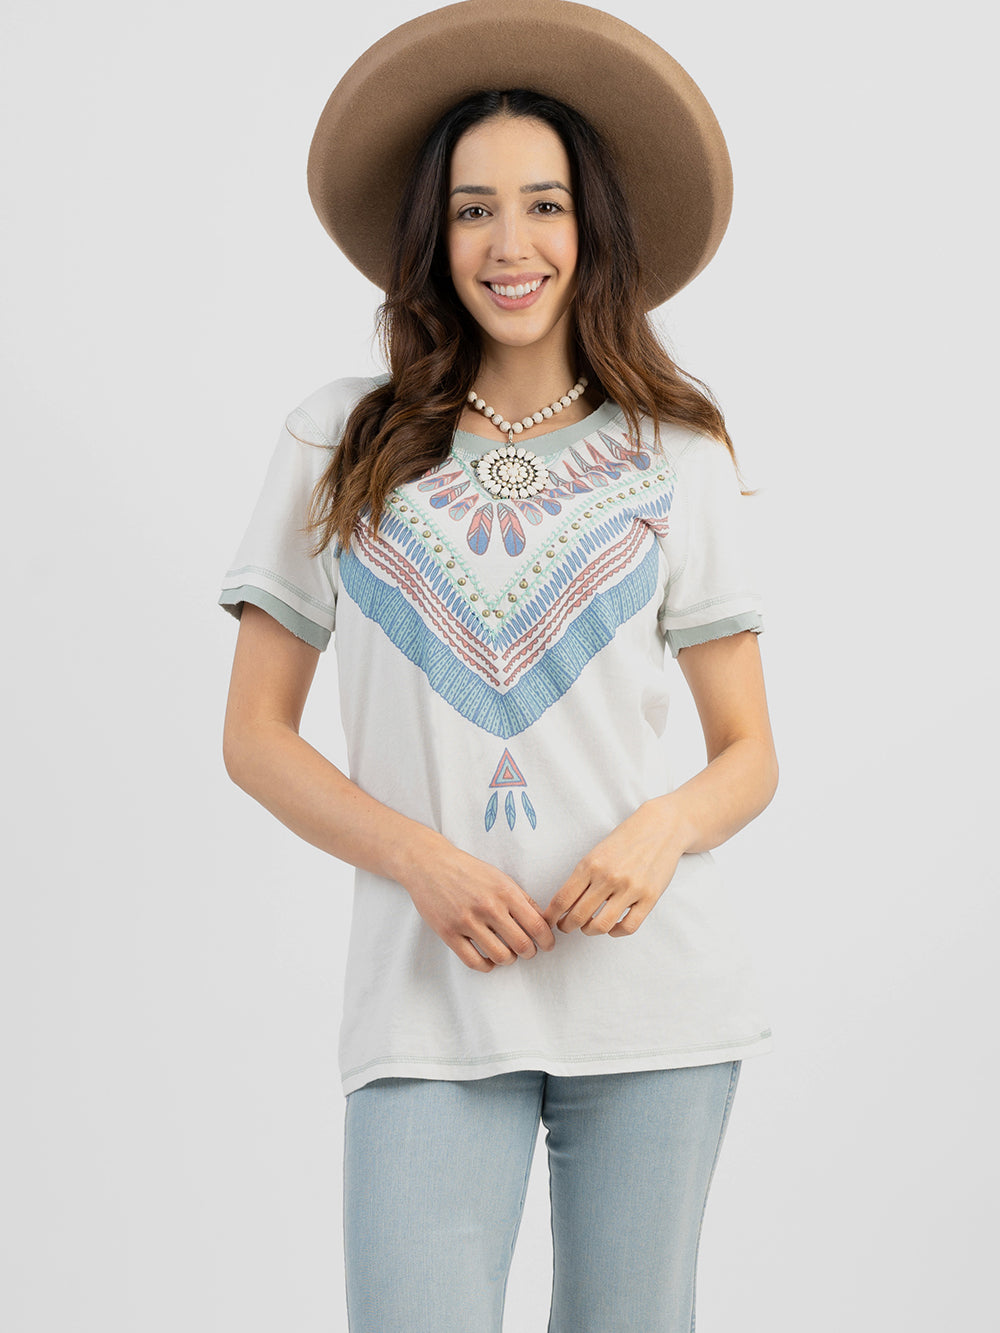 Women's Mineral Wash “Serape” Graphic Short Sleeve Tee - Cowgirl Wear